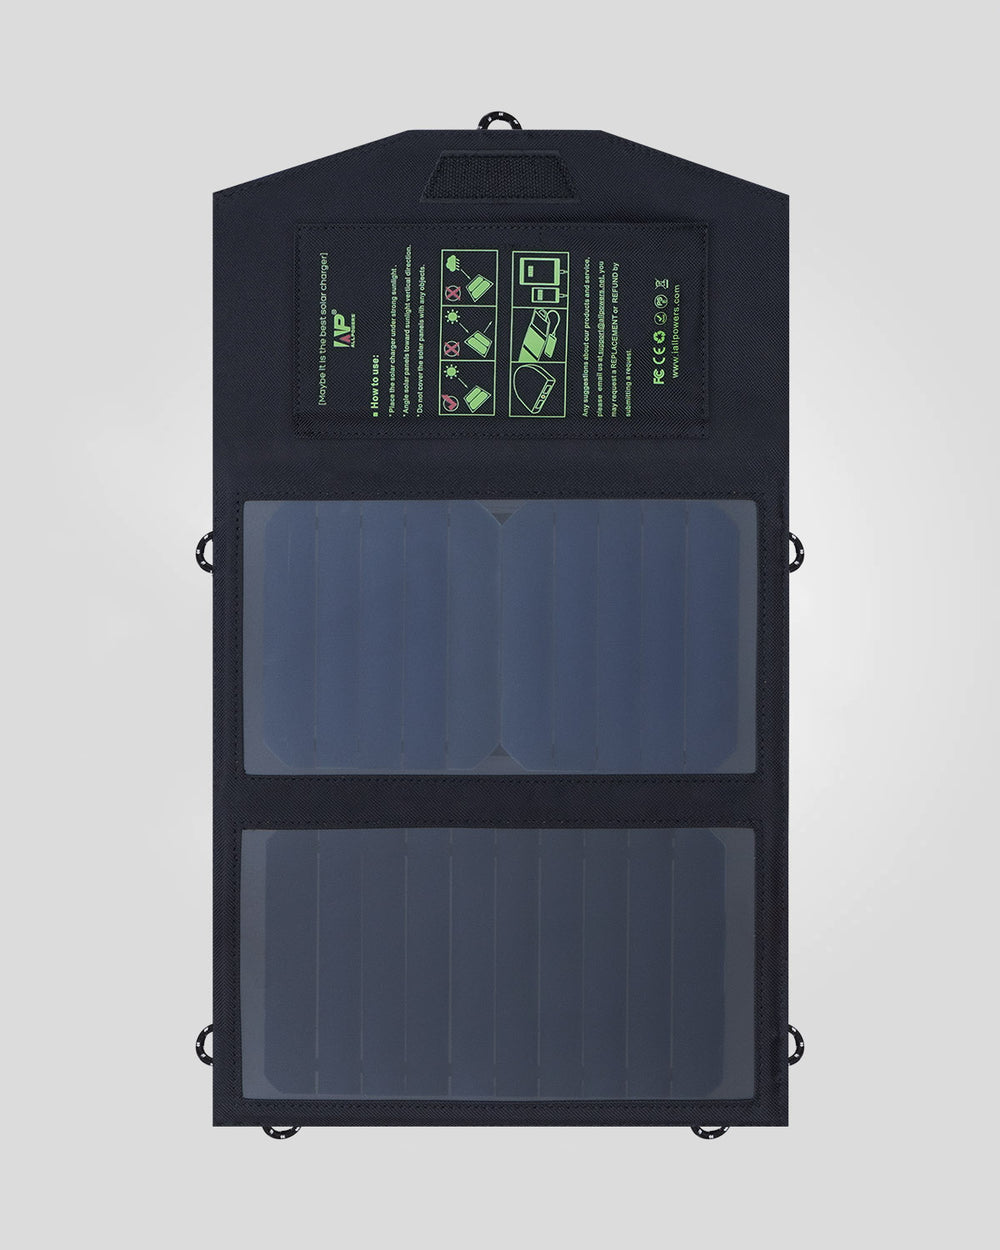 ALLPOWERS 5V 10W Portable Solar Panel